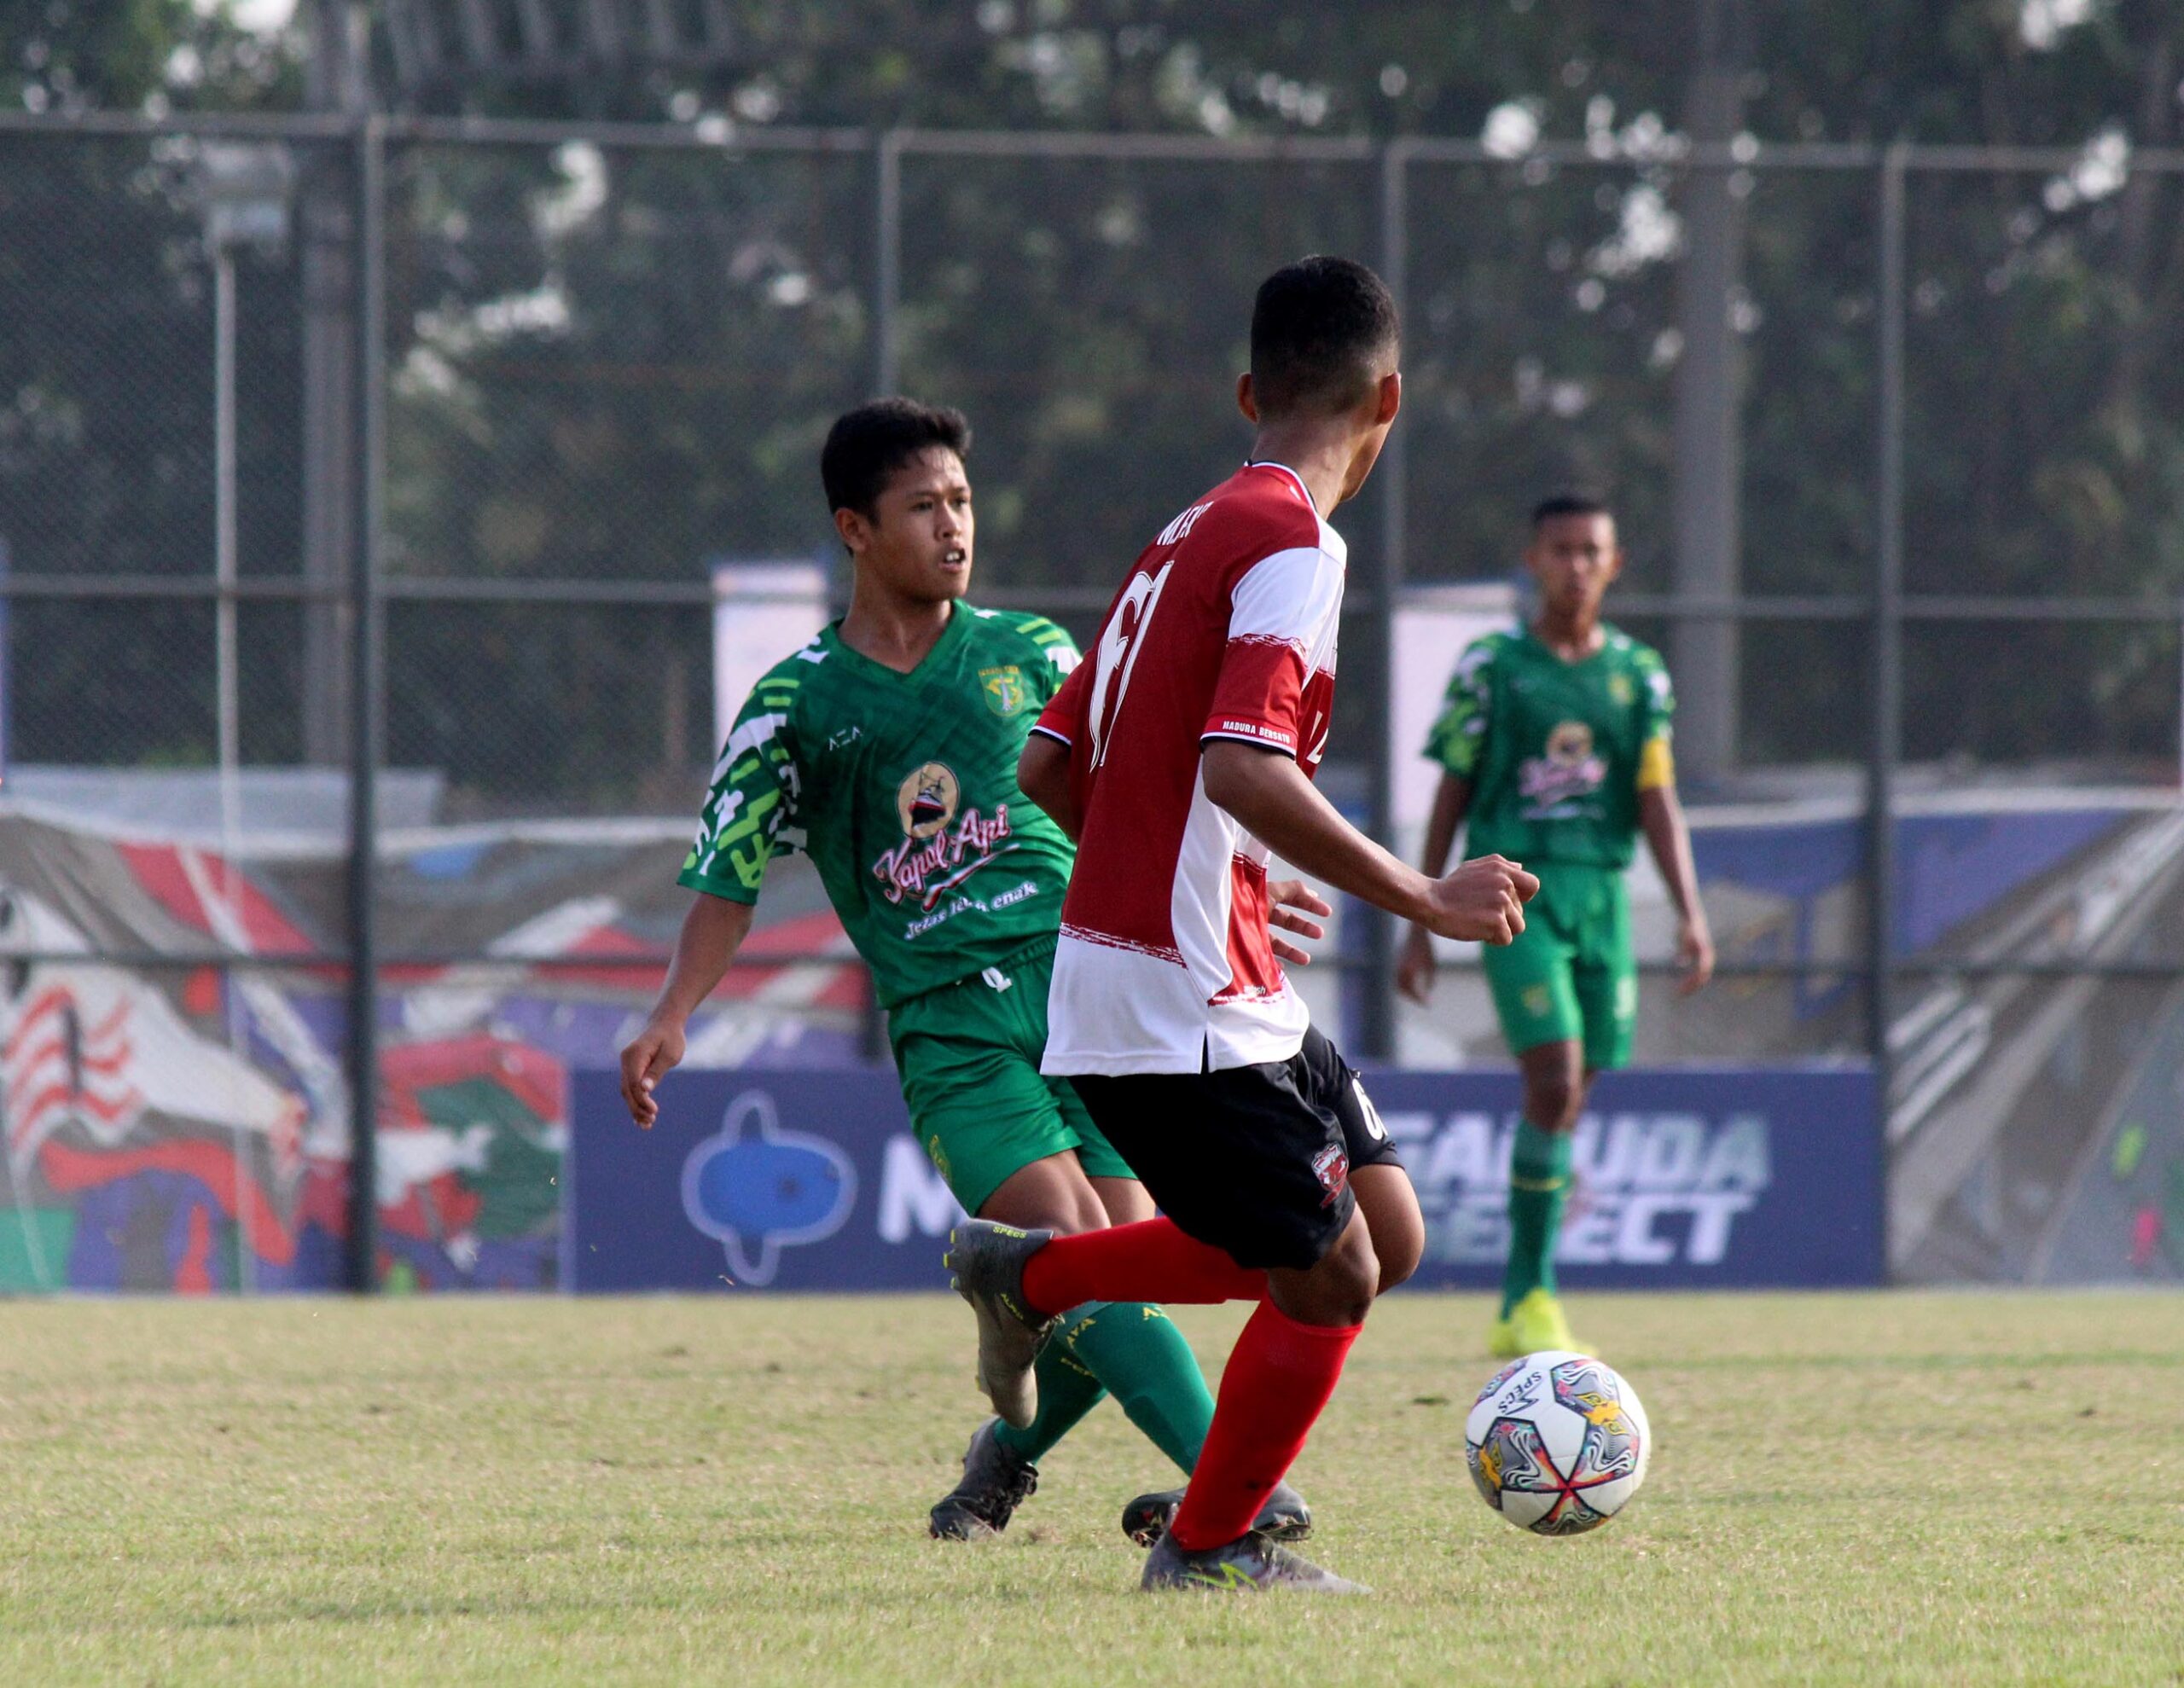 IMG 8354 scaled - EPA U16, Persebaya kalah 0-1 dari Madura United